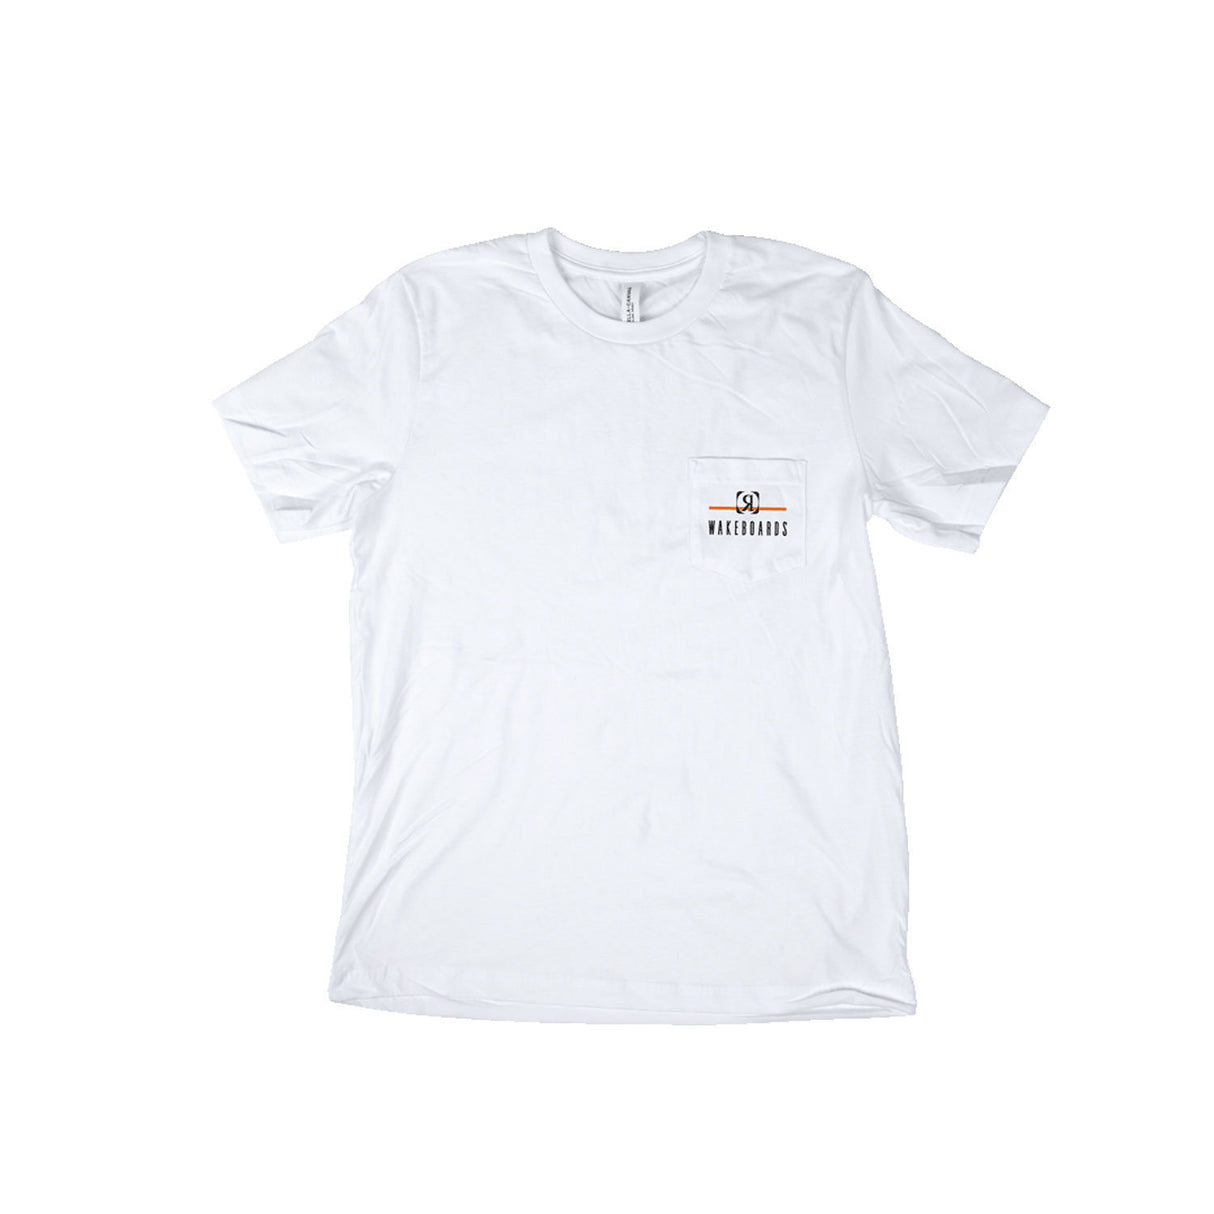 Ronix Homeland Pocket T-Shirt